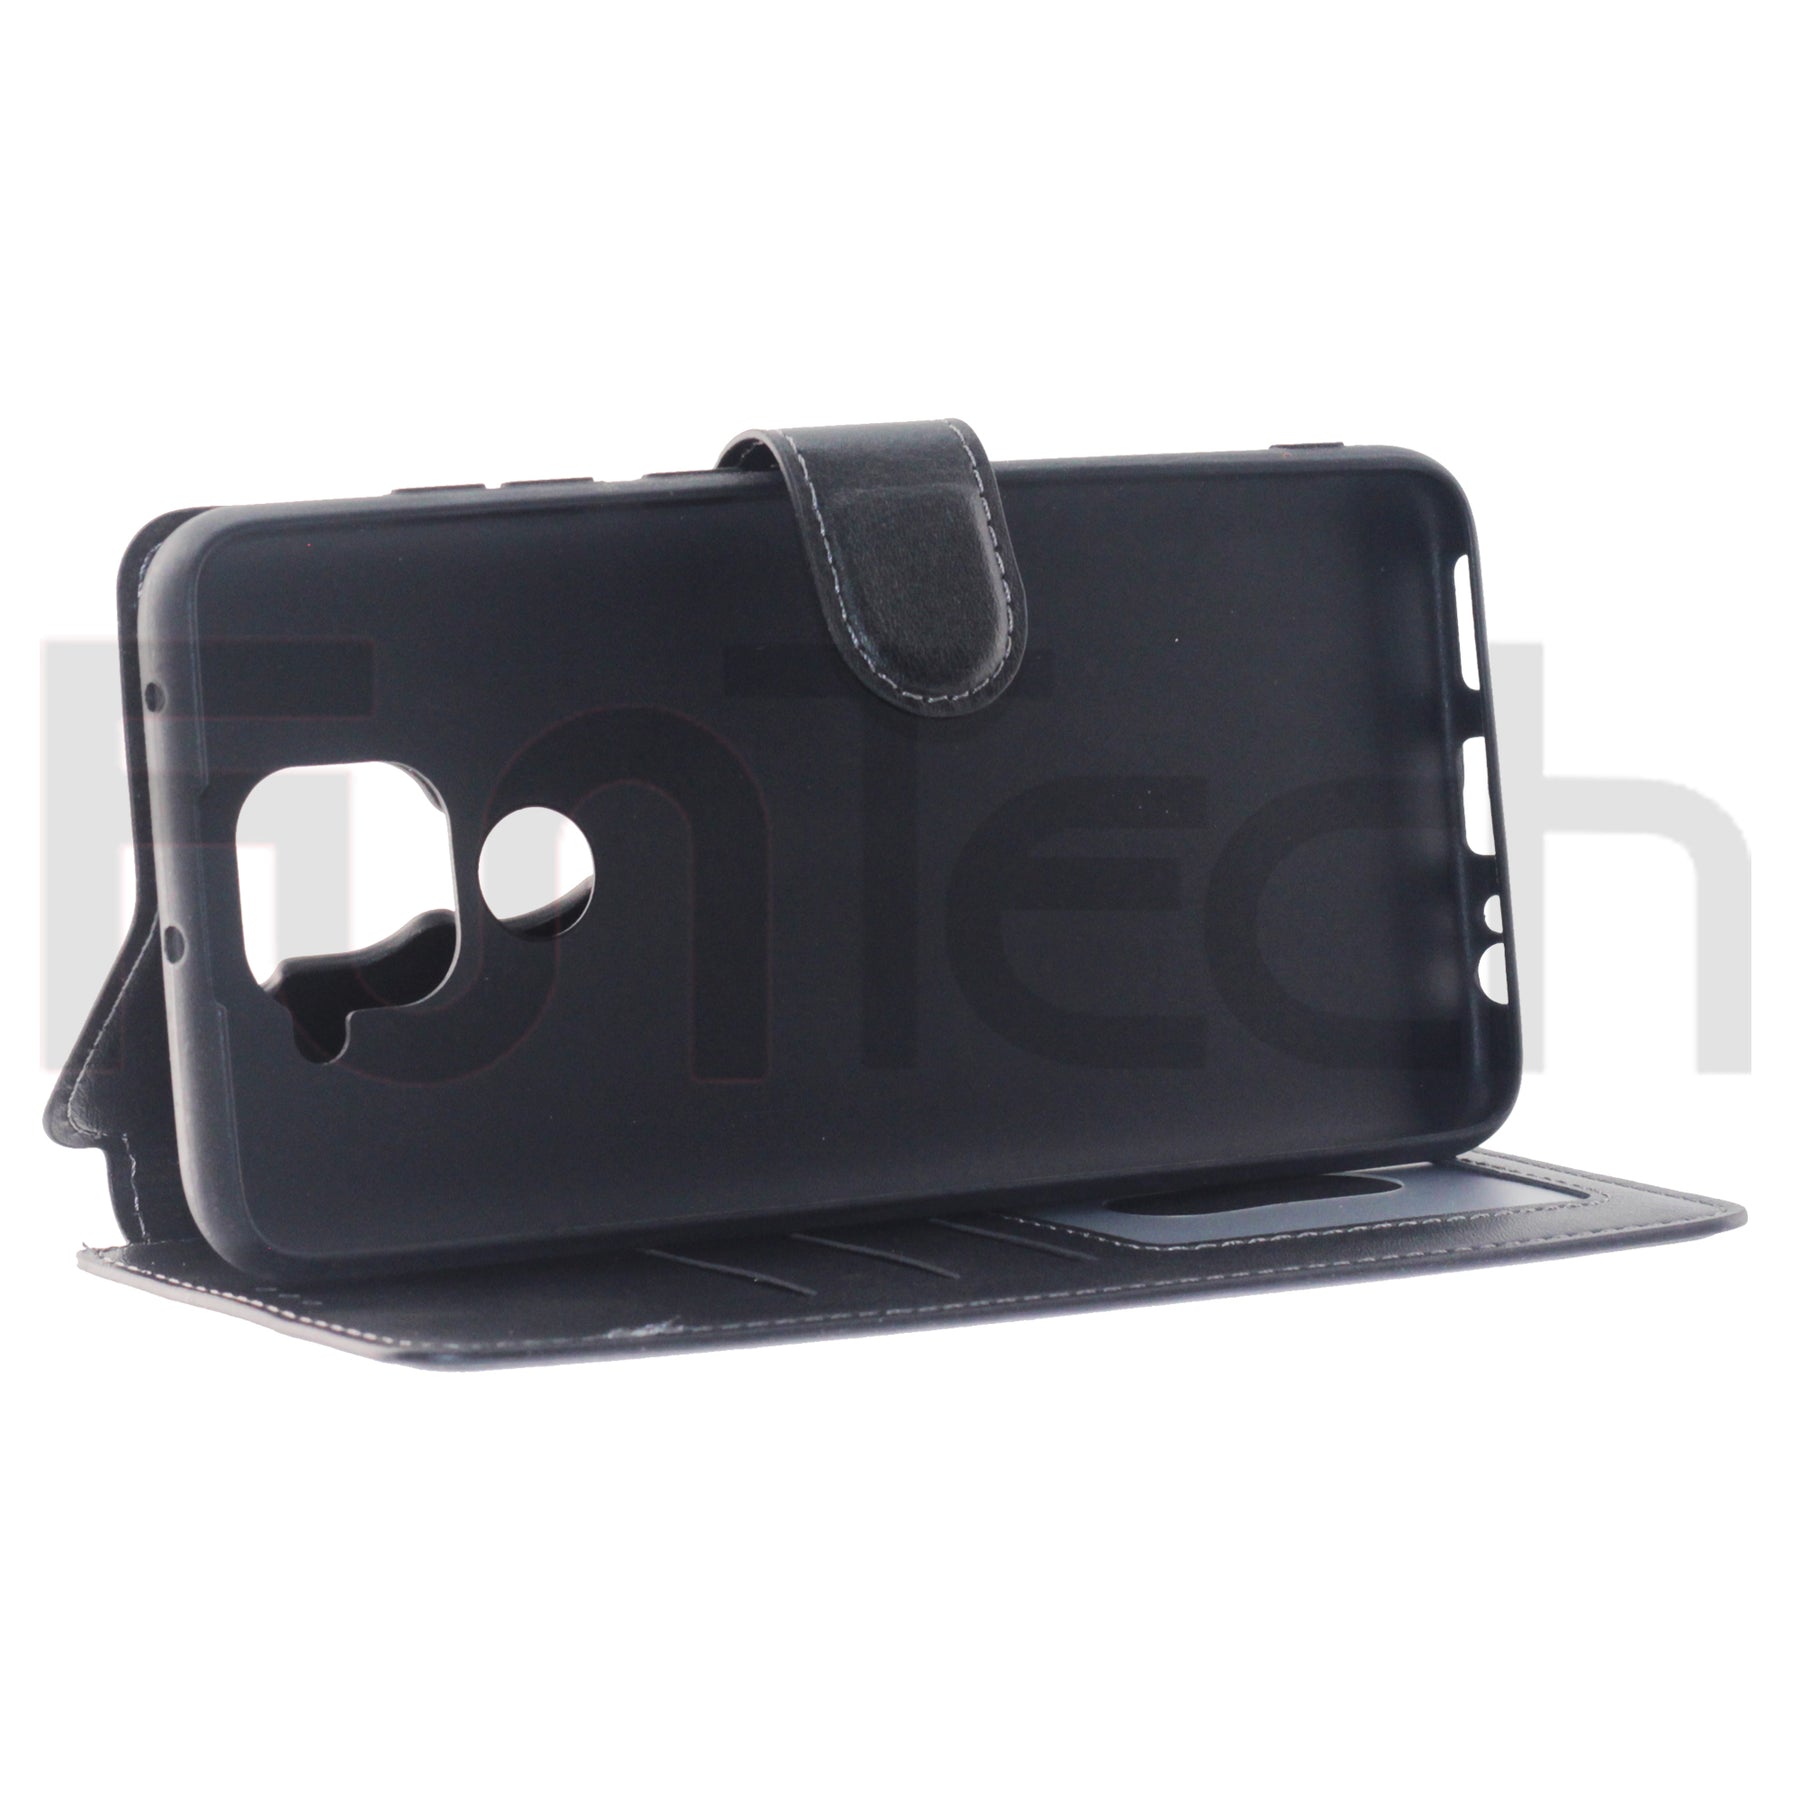 Xiaomi Redmi Note 9 Pro, Leather Wallet Case, Color Black.